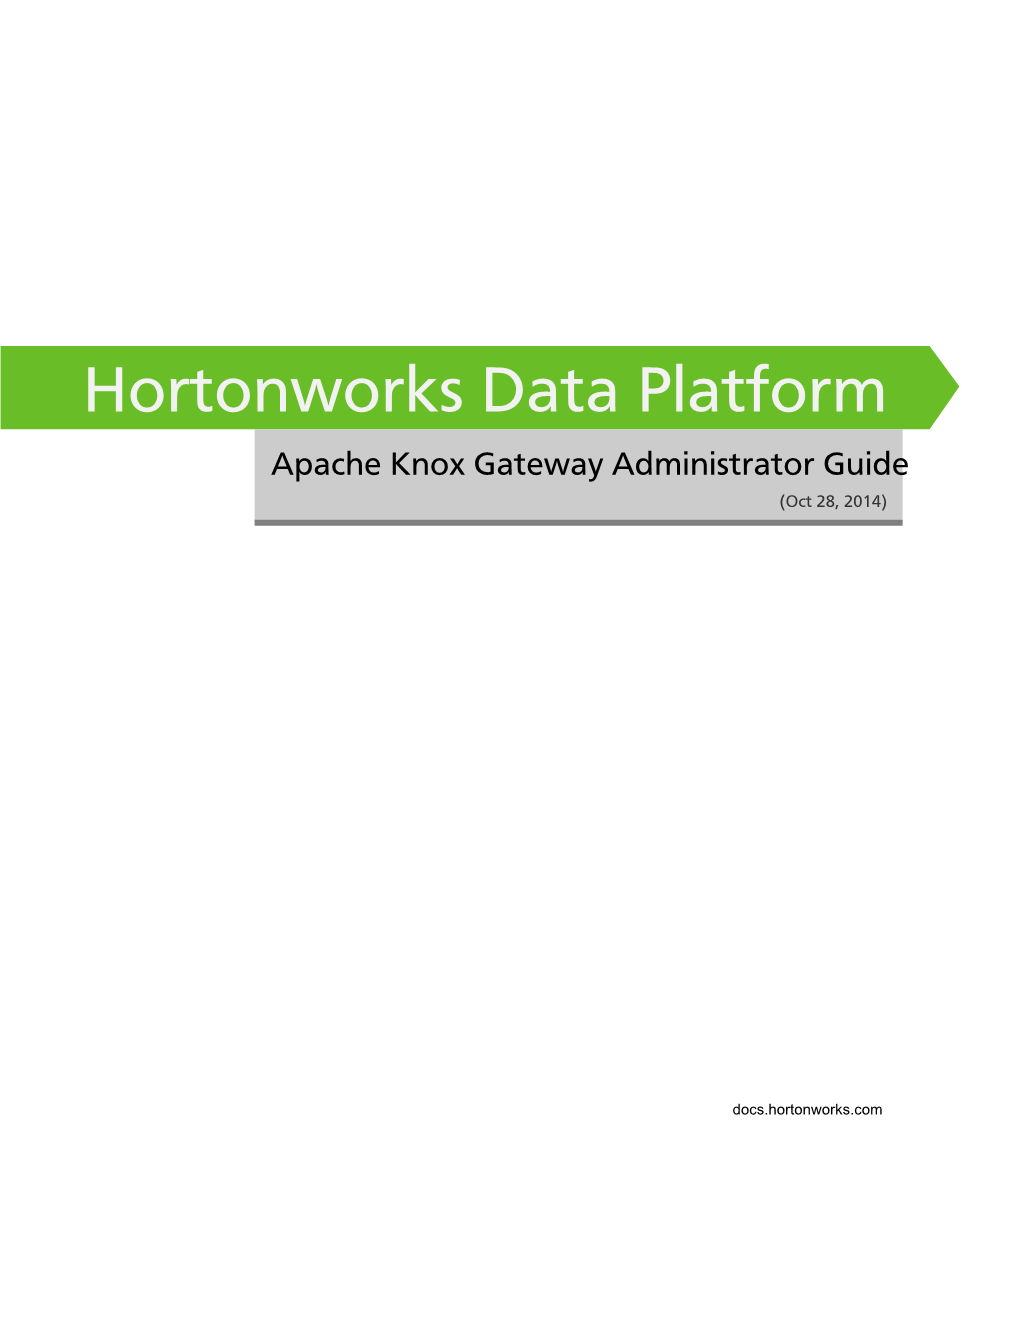 Hortonworks Data Platform Oct 28, 2014